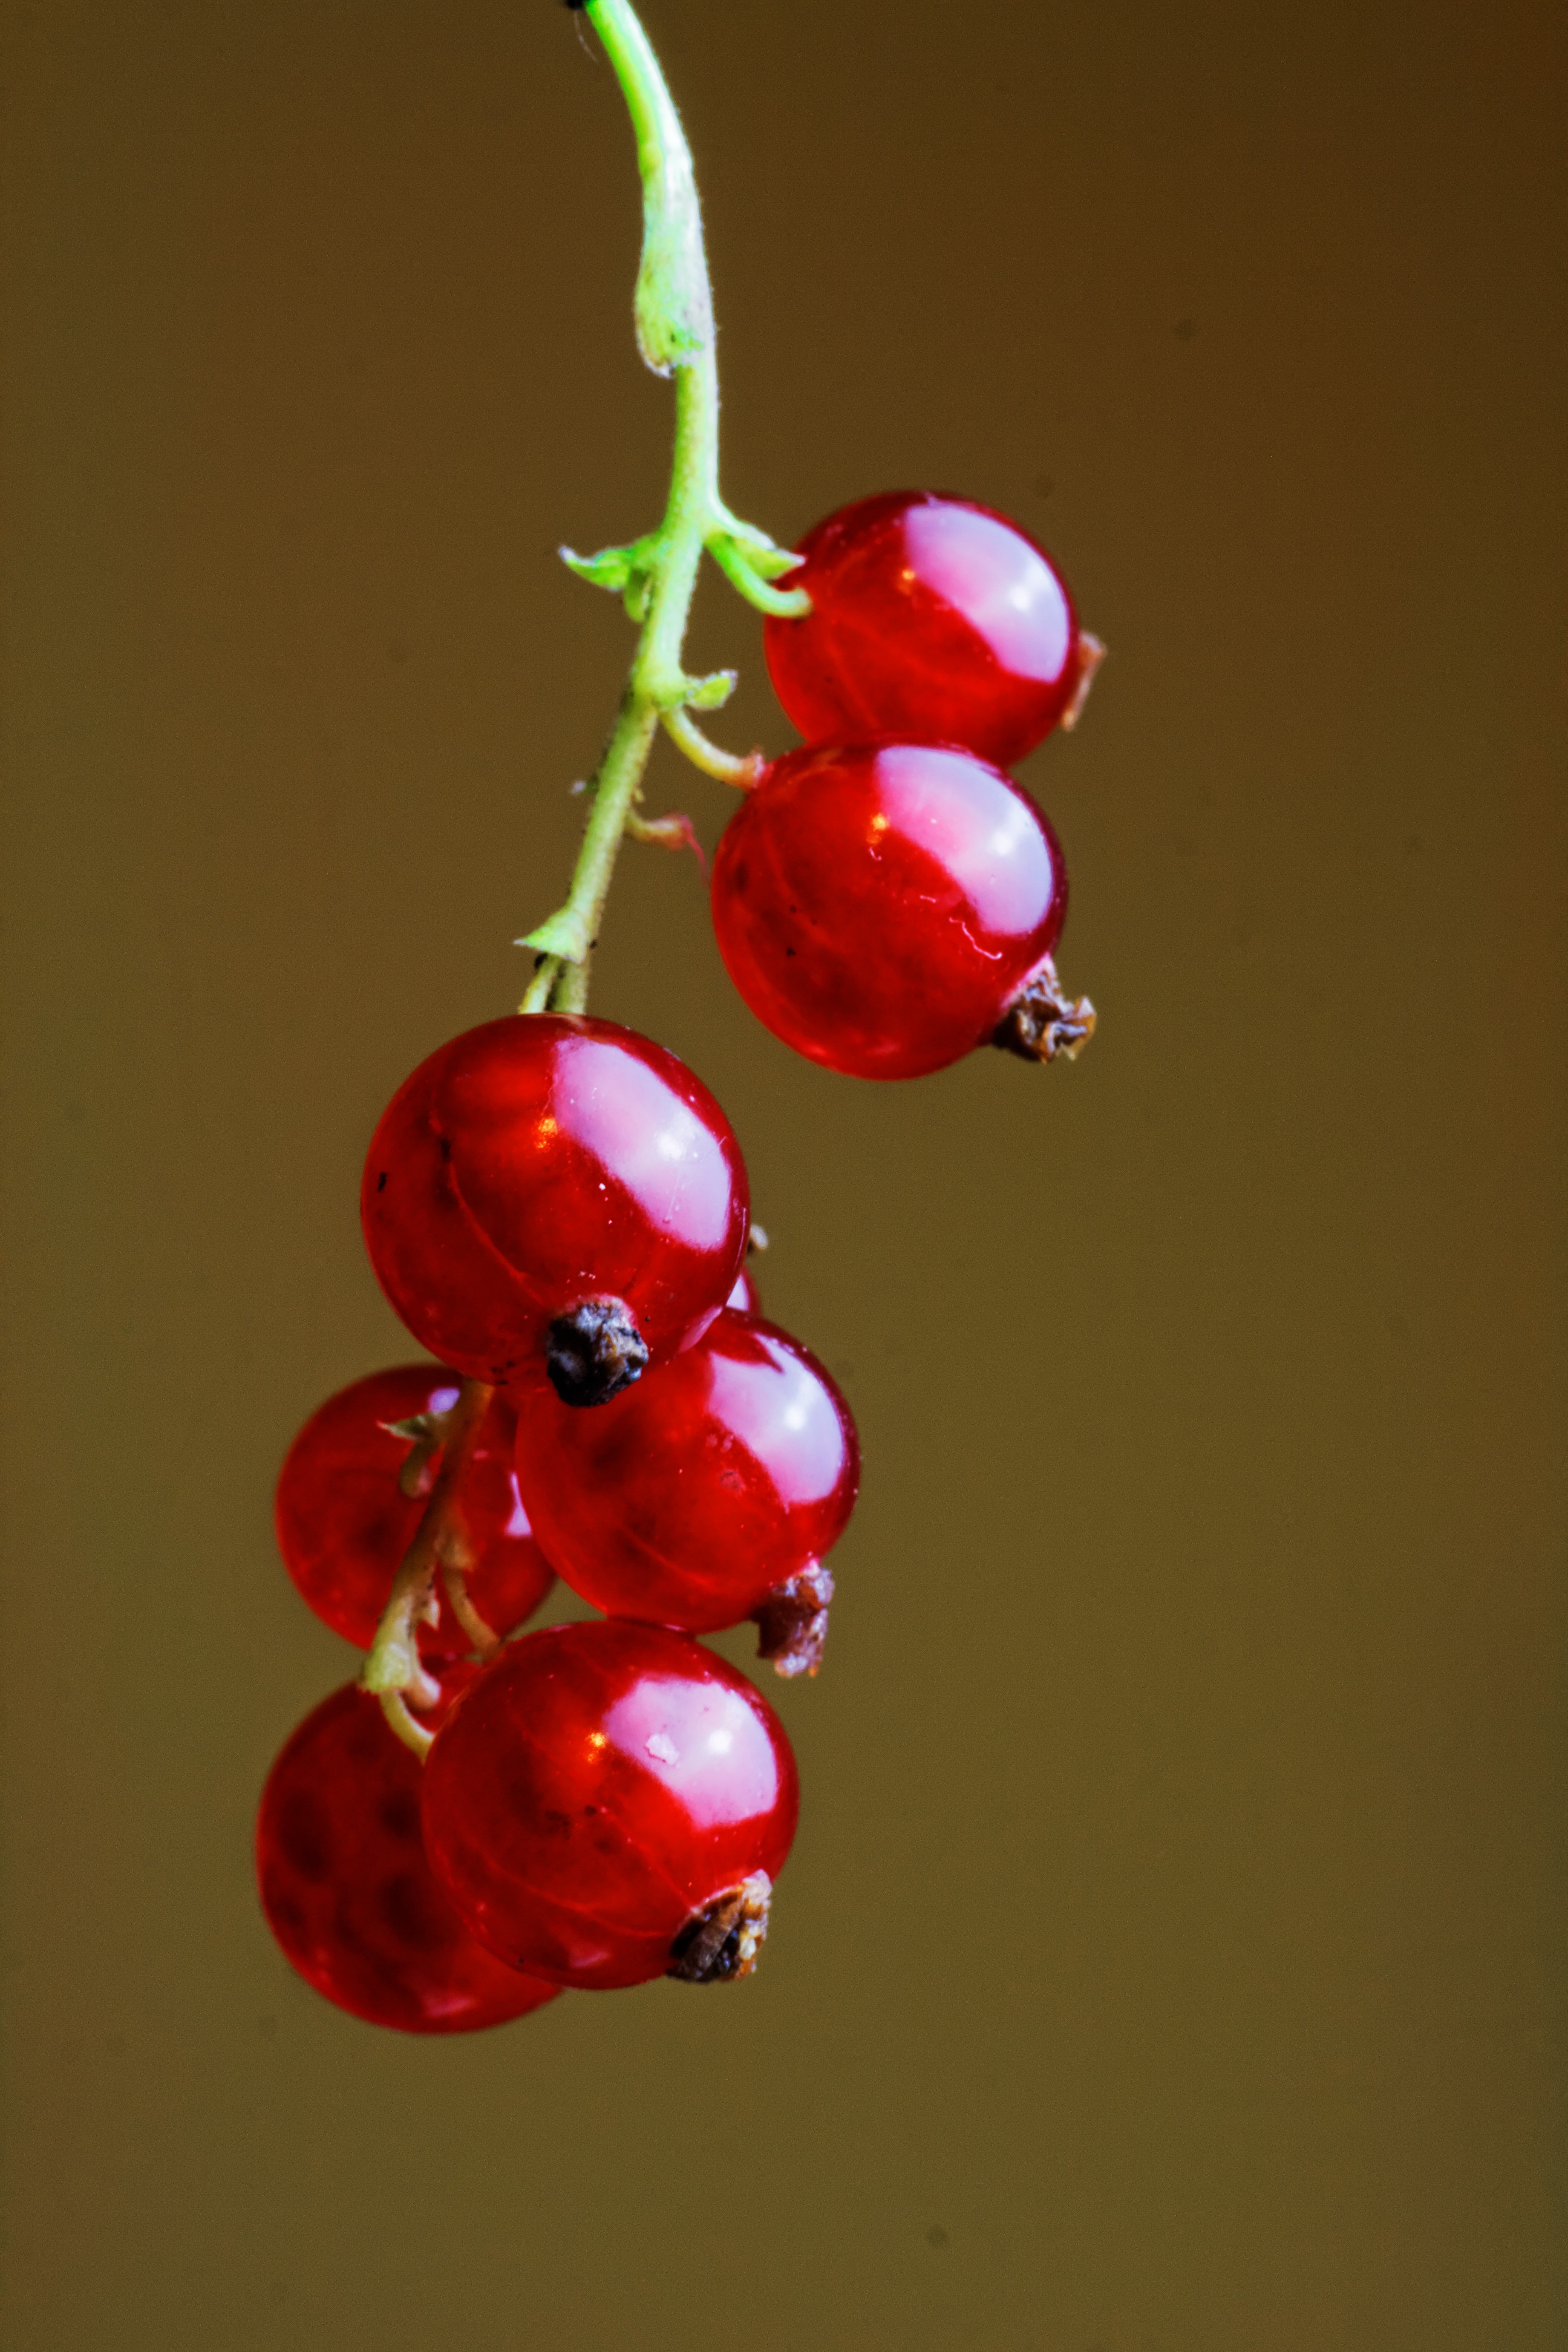 red round fruits